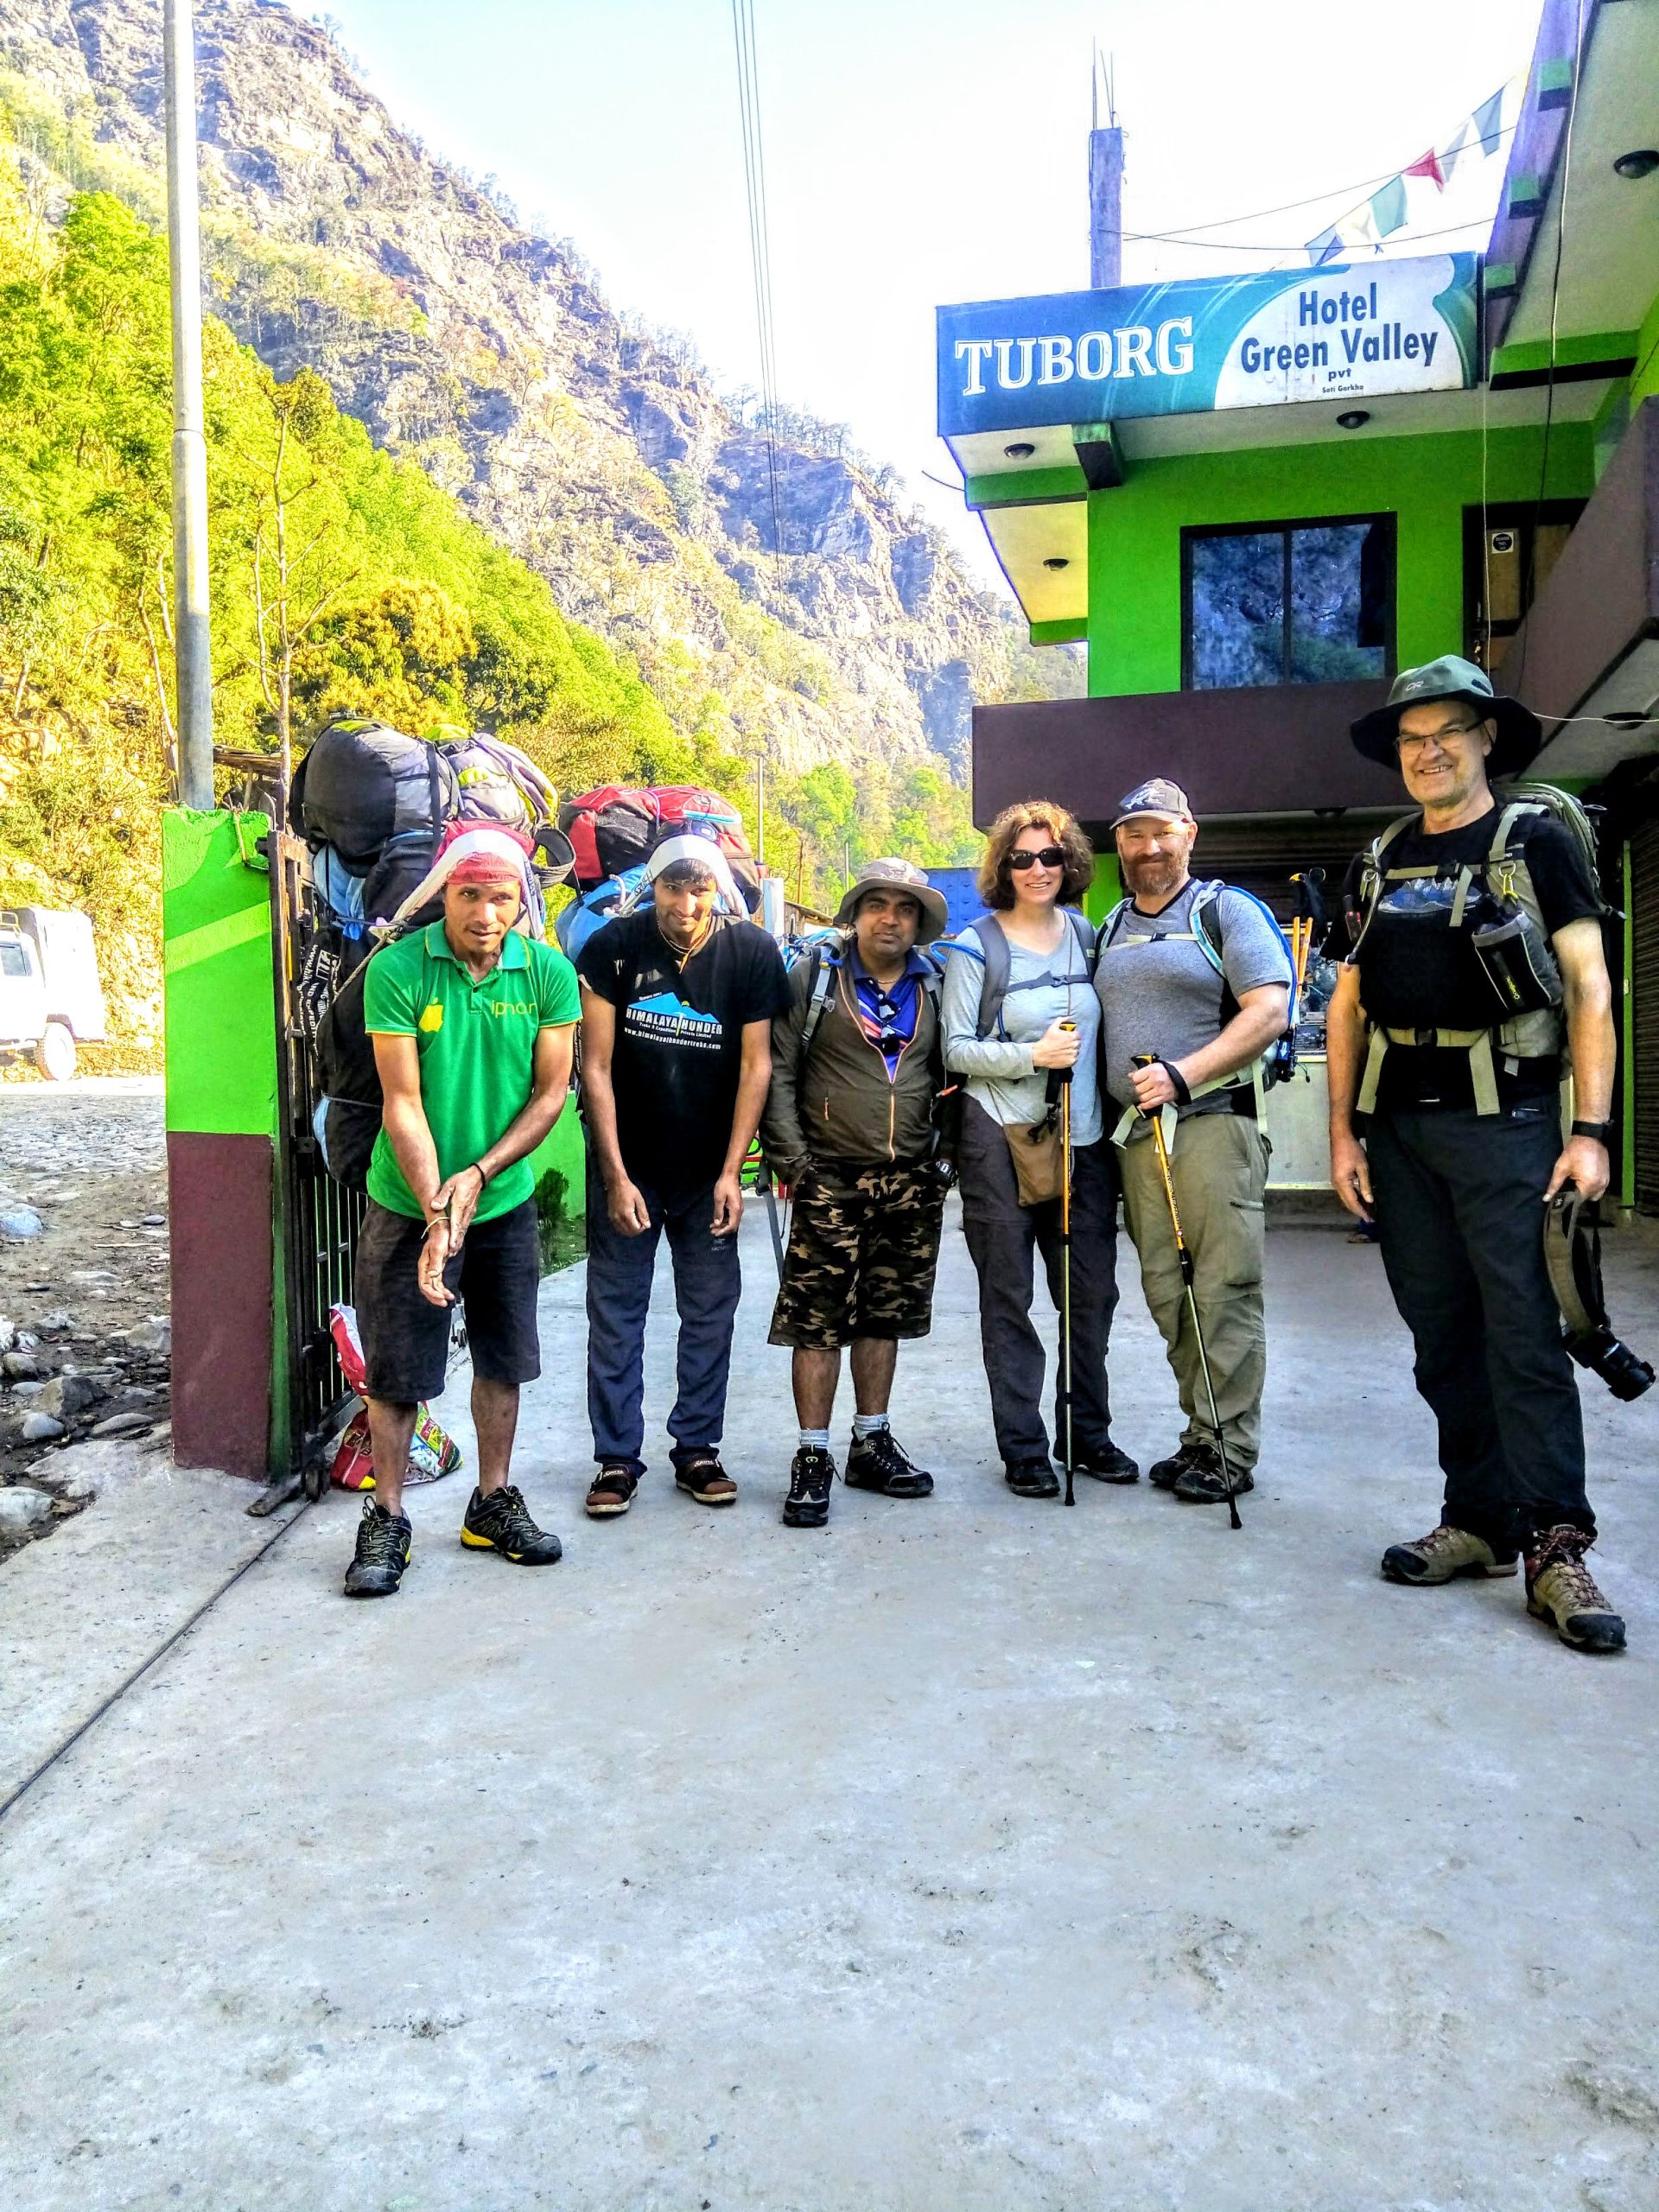 Group photo of people trekking in manaslu circuit| Manaslu Circuit Trek - Hiking Himalayas